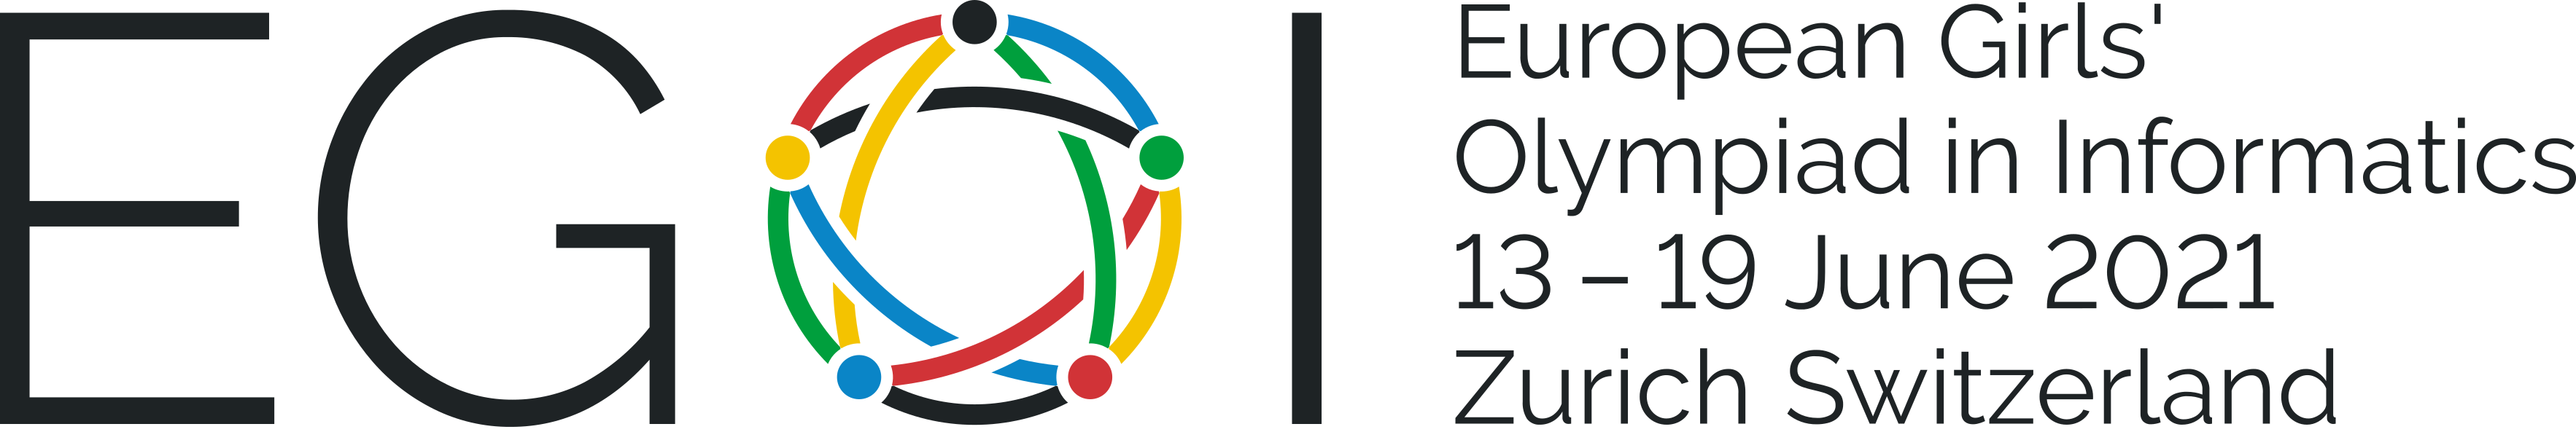 Edition logo